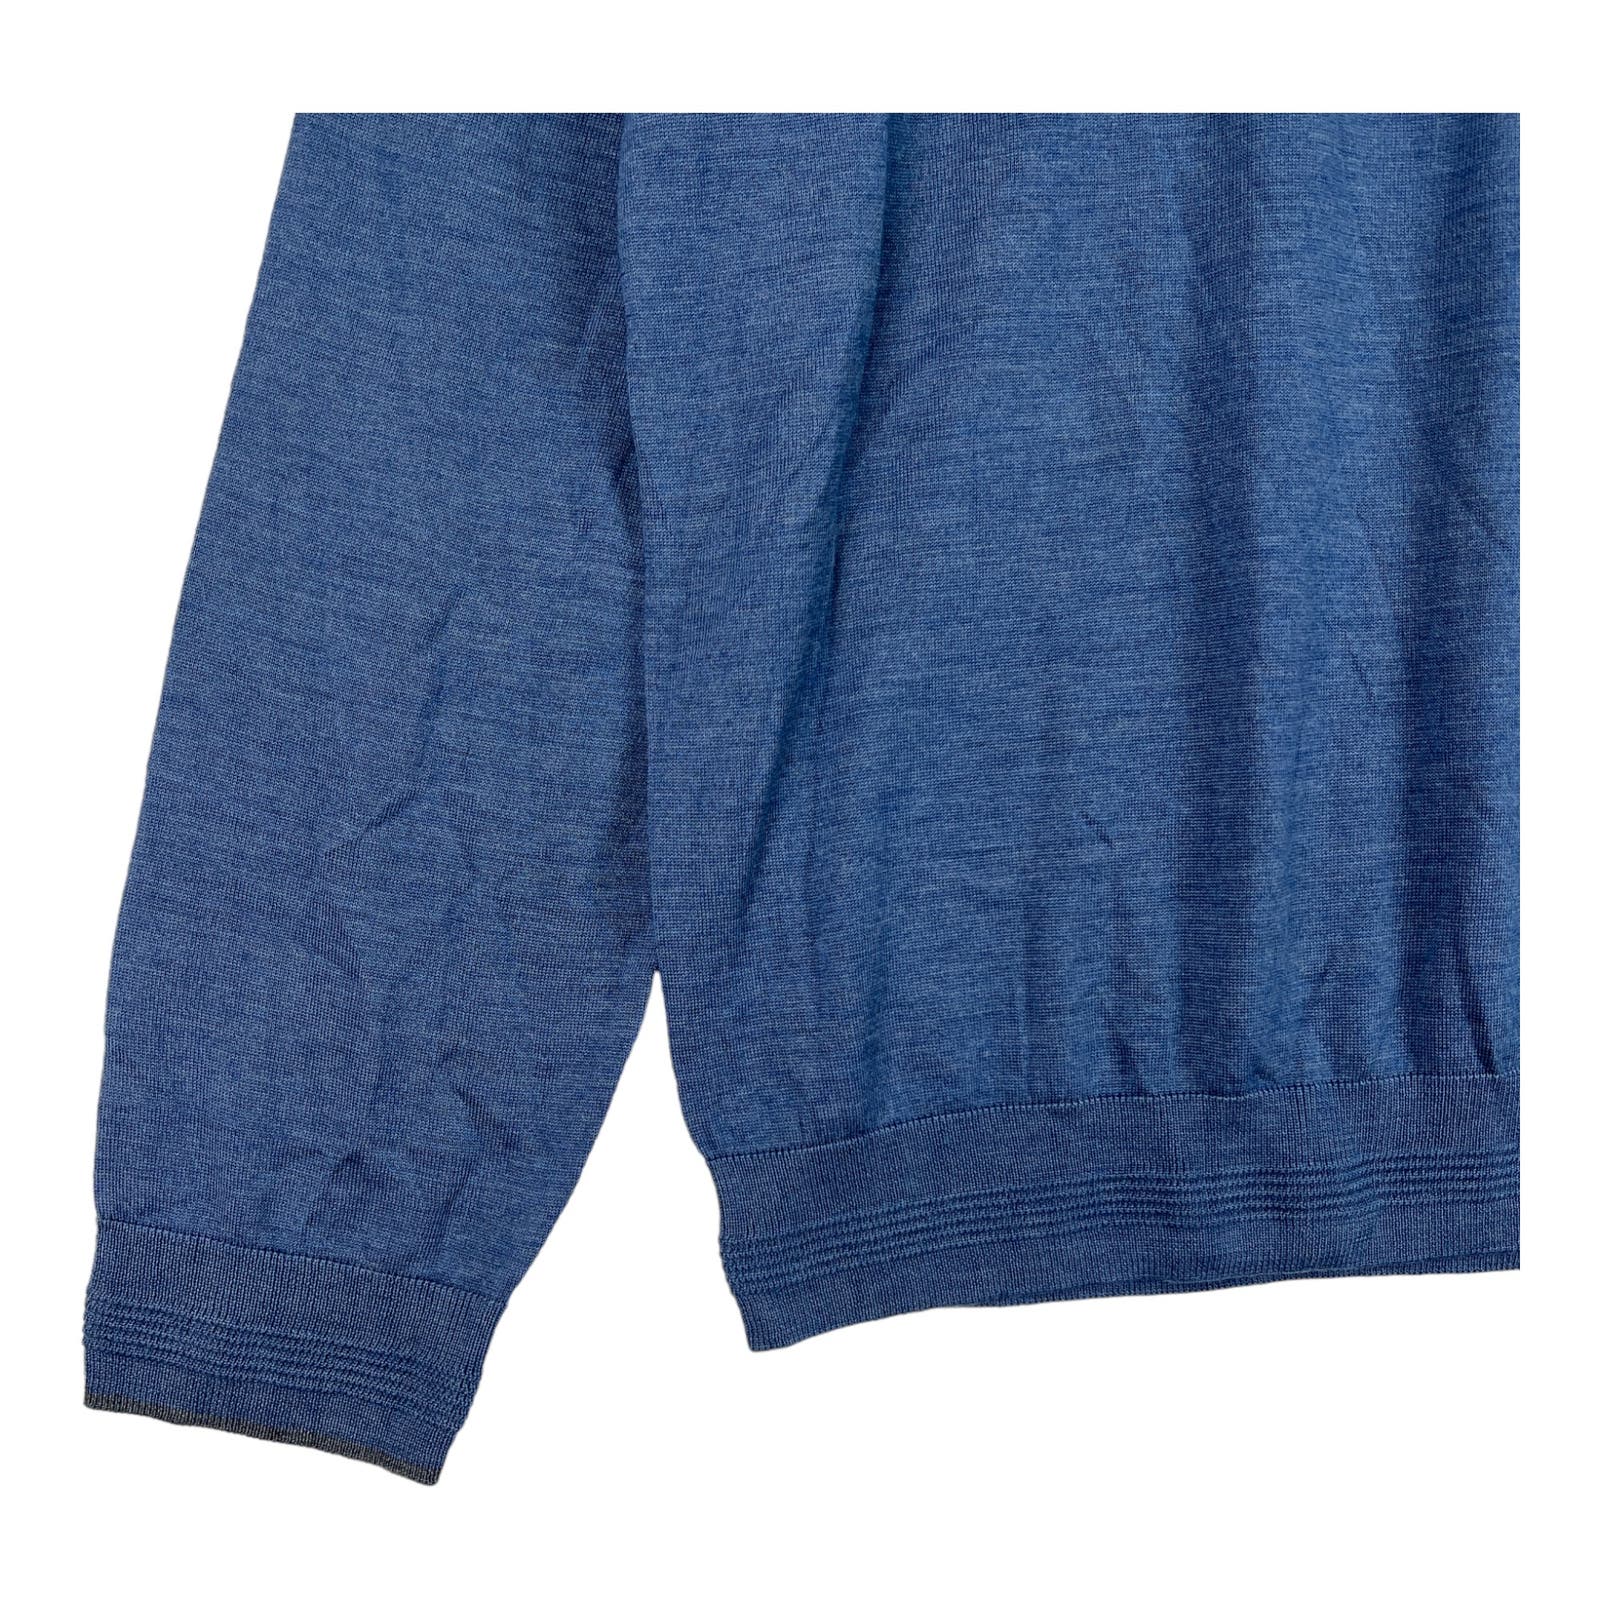 Dylan Gray Men Blue Crew Neck US XL Long Sleeve Classic Sweater